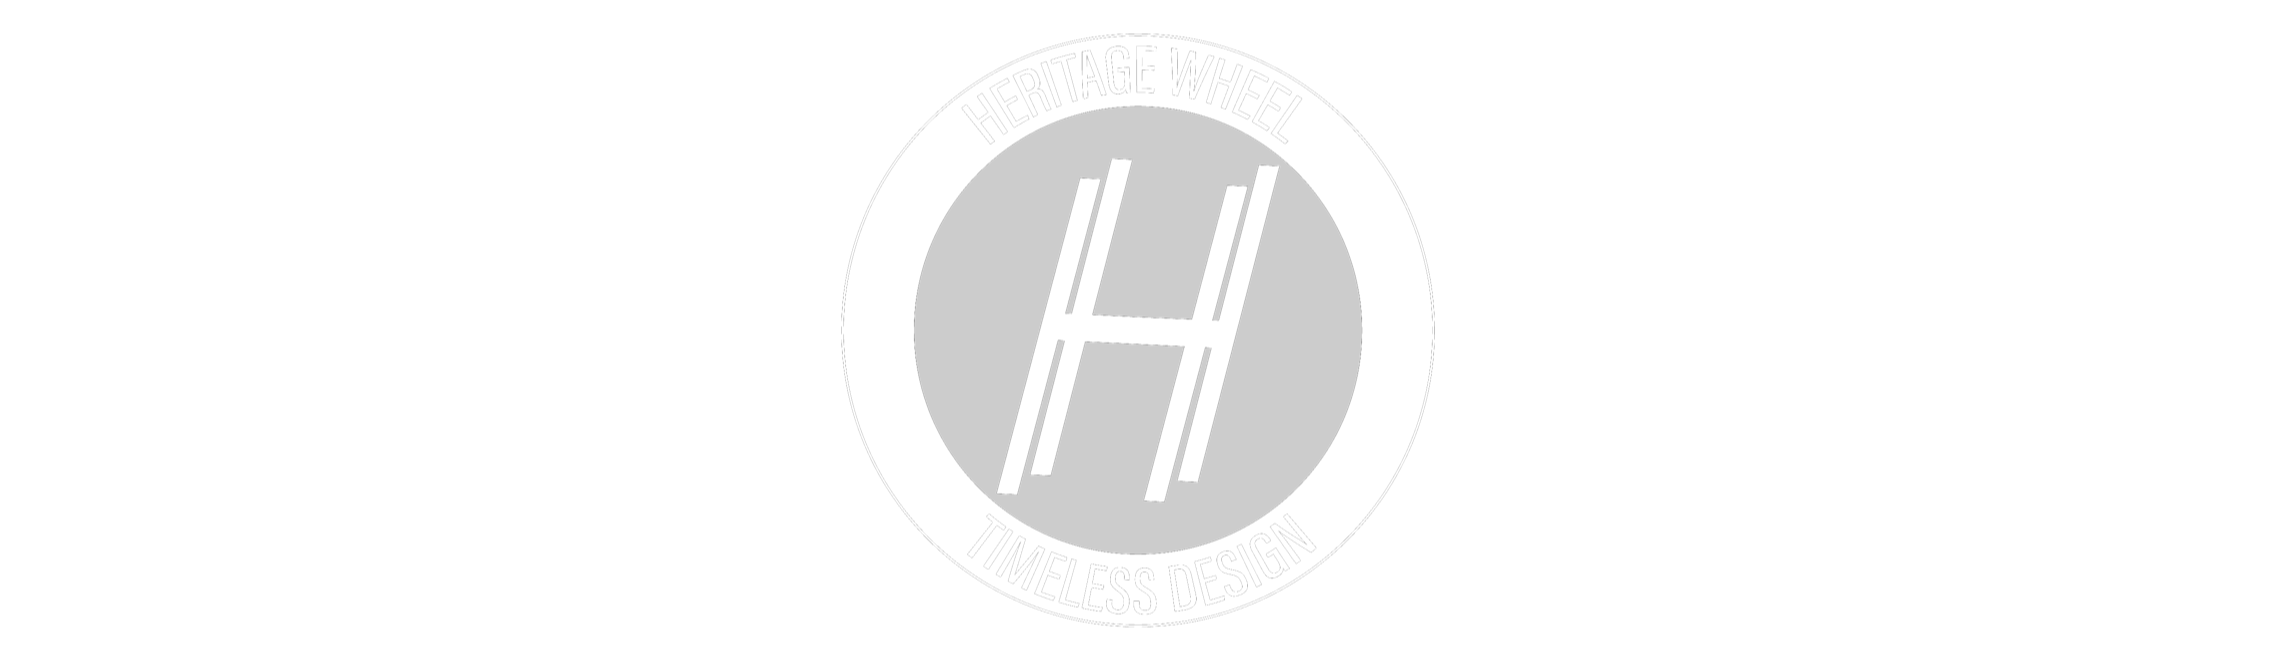 heritage wheels logo